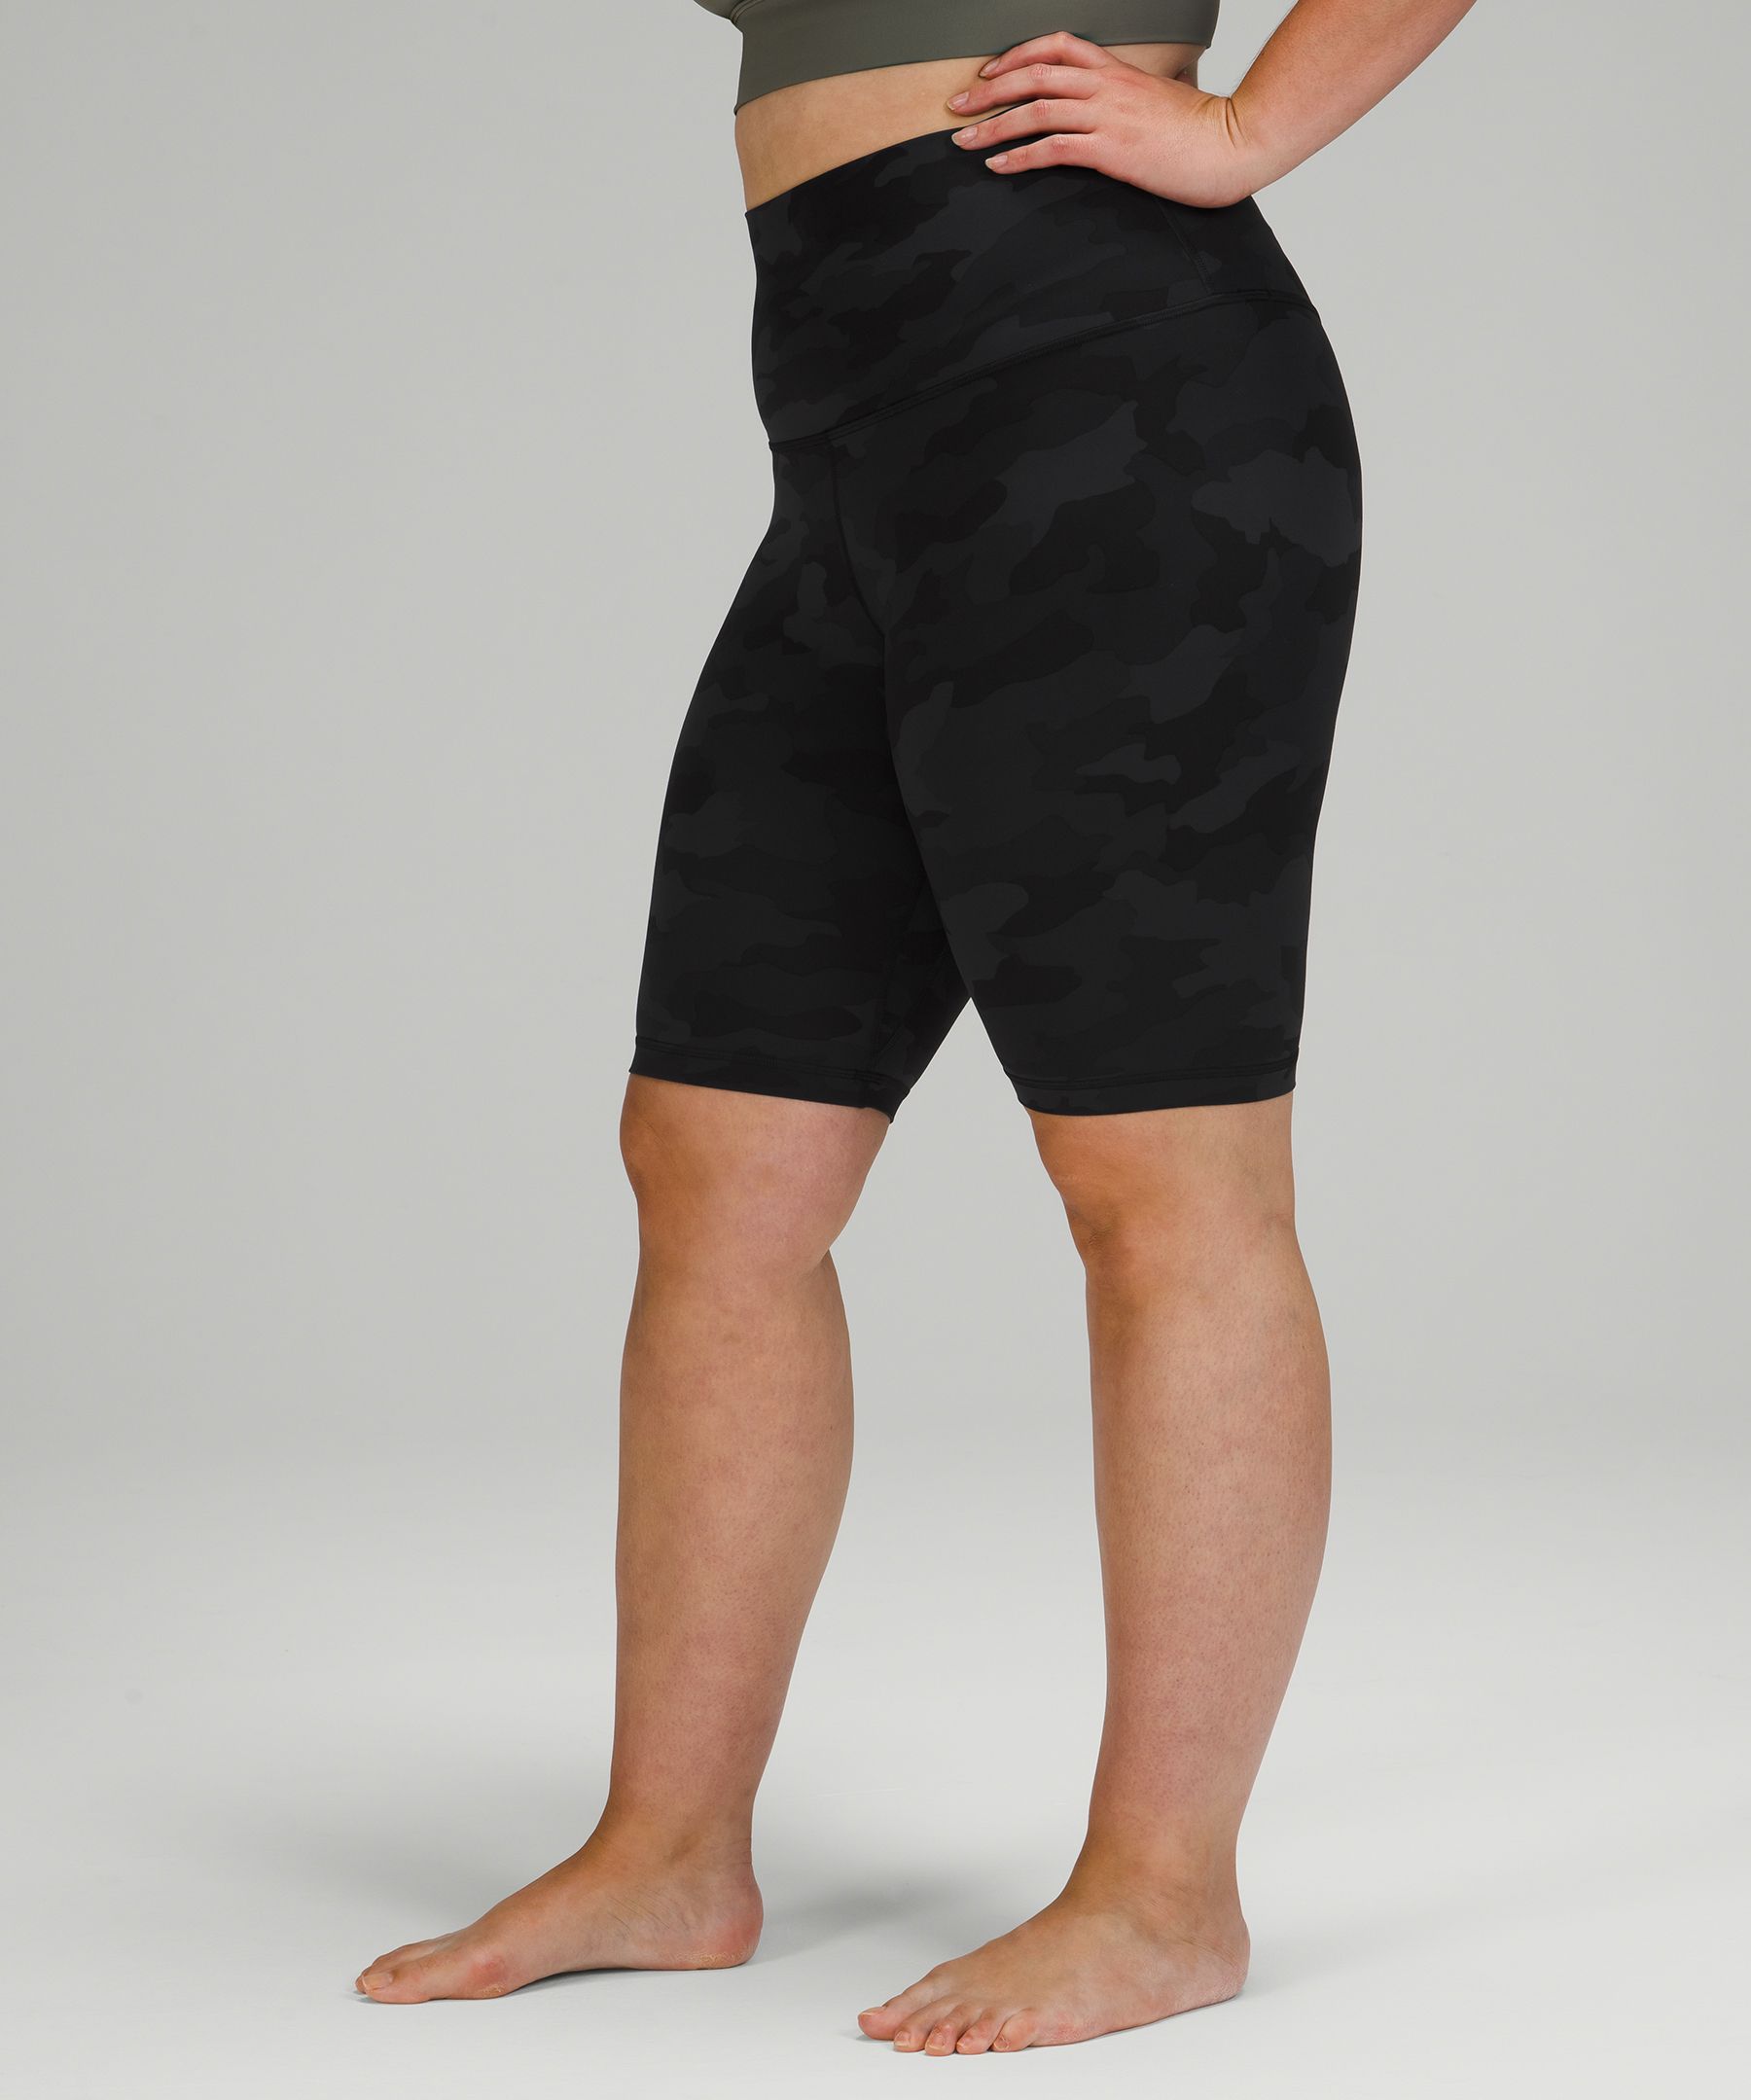 Lululemon Align™ Super-high-rise Shorts 10"